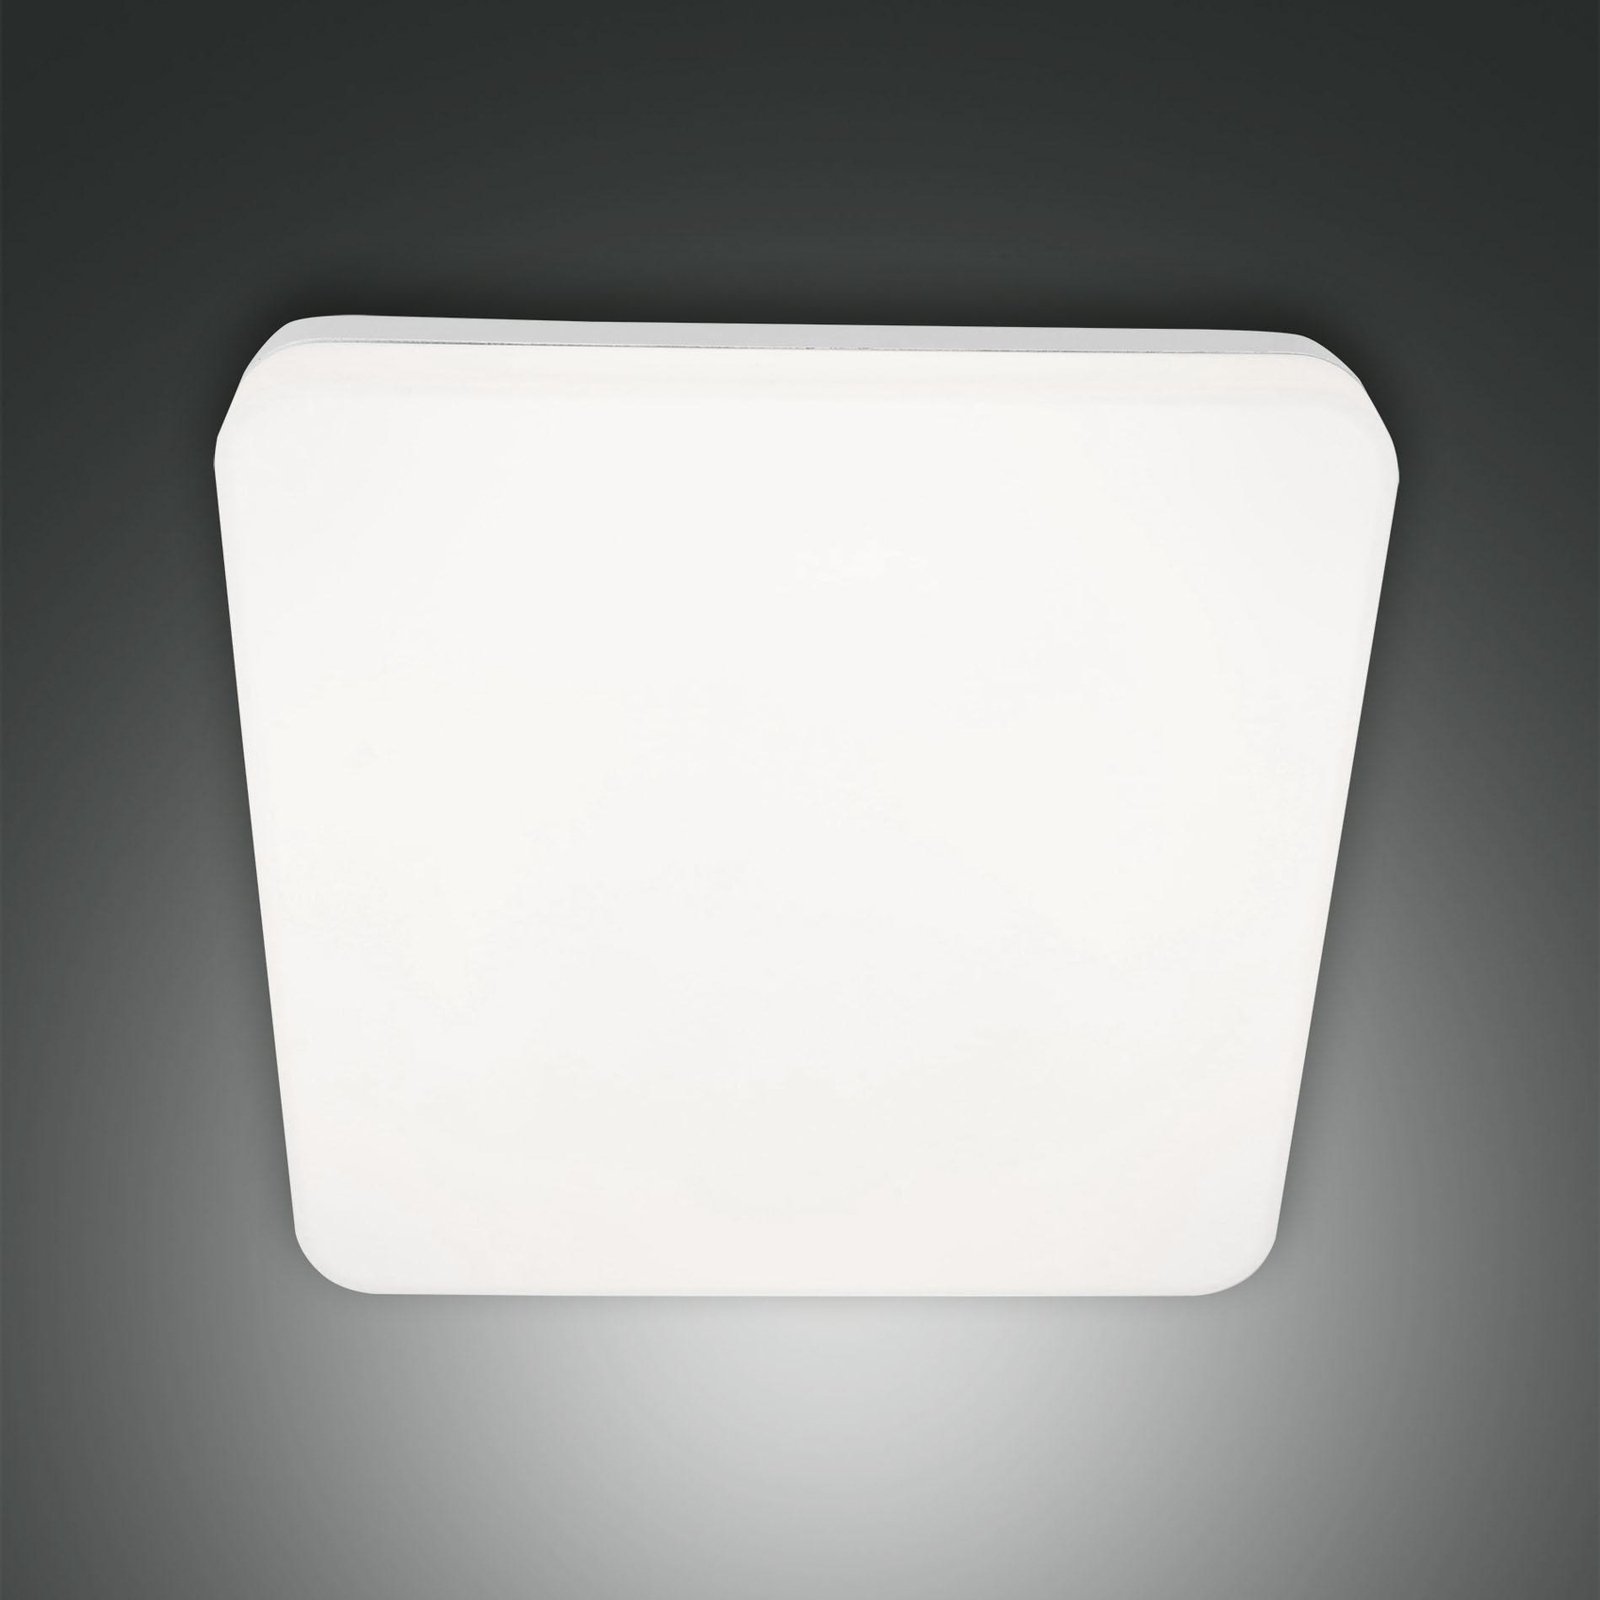 Folk LED utomhustaklampa, 28 cm x 28 cm, vit, IP65